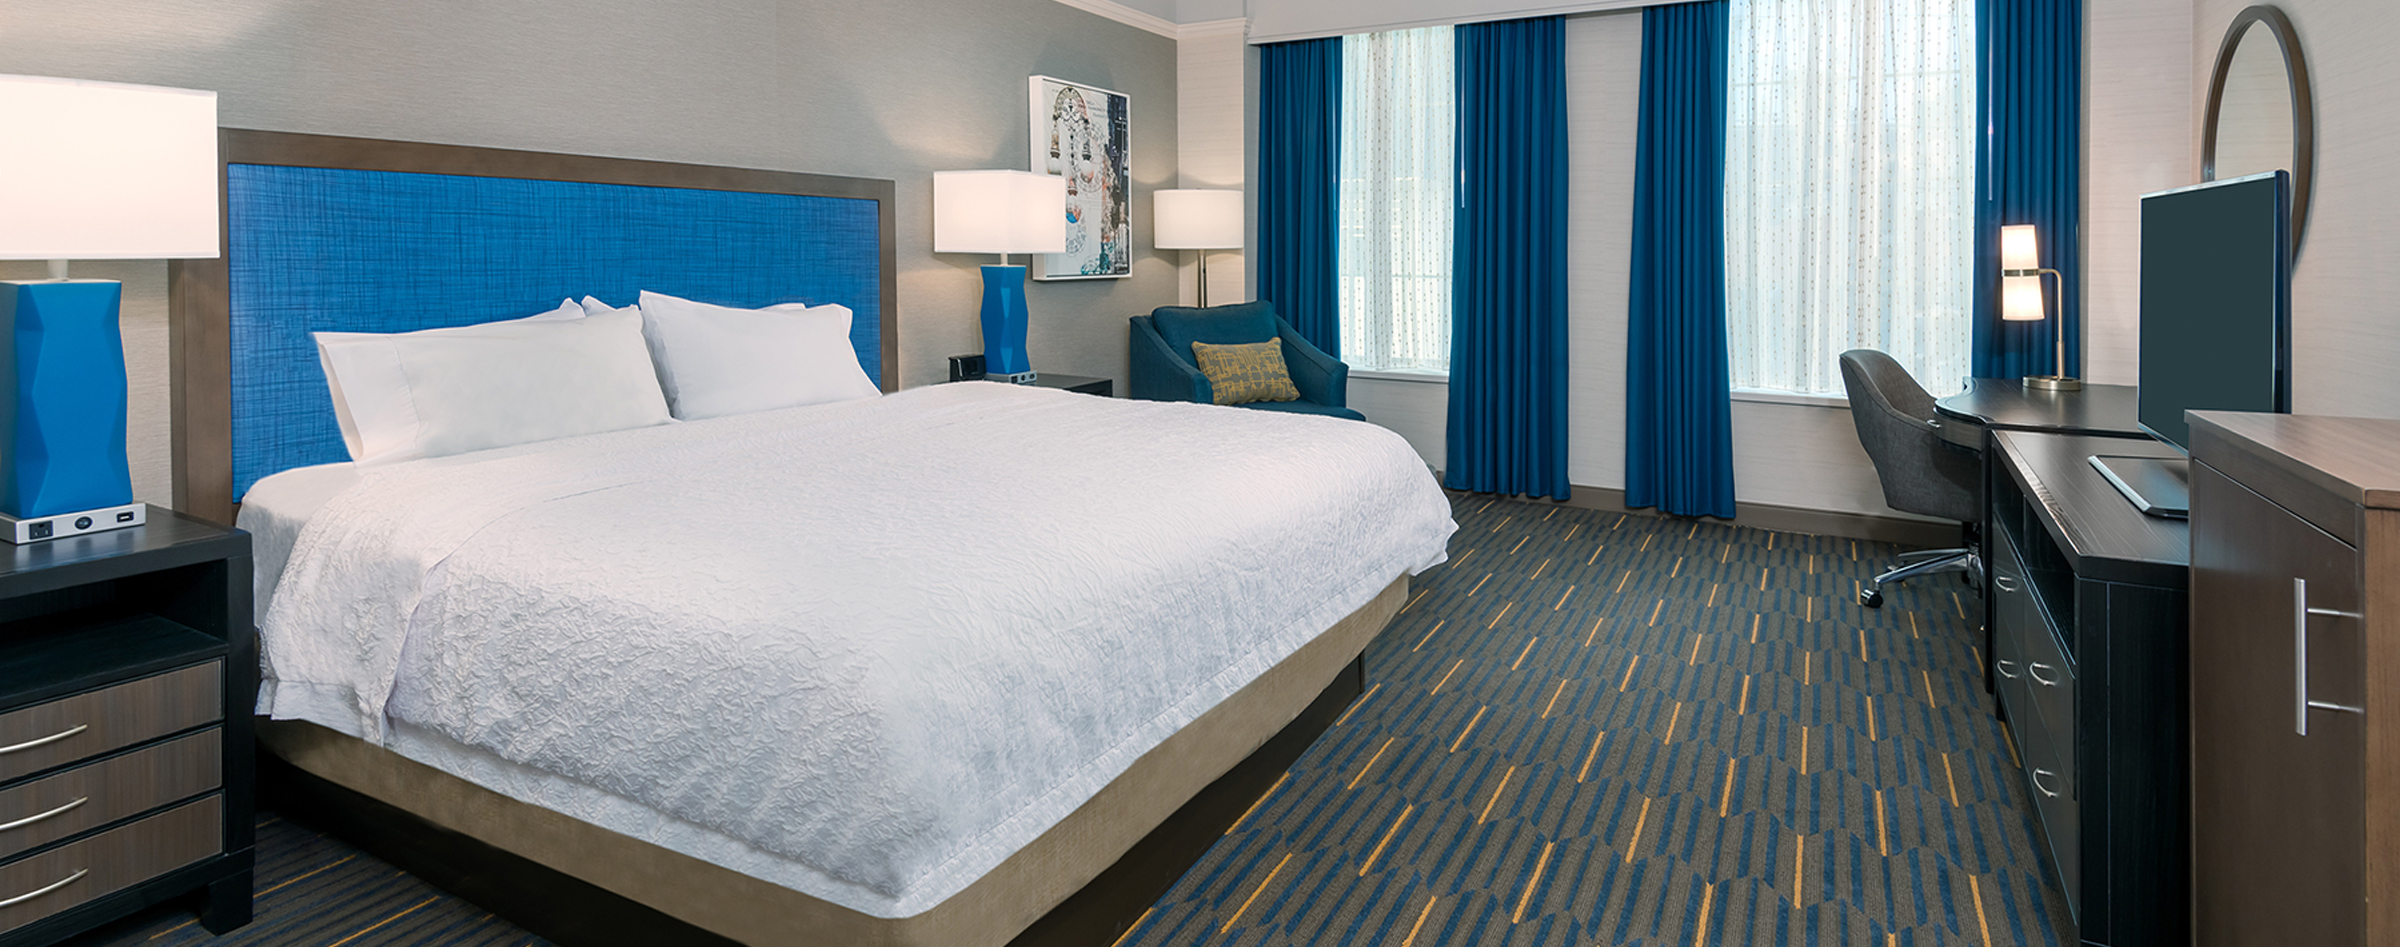 King Hotel Room at Hampton Inn & Suites Buffalo Downtown